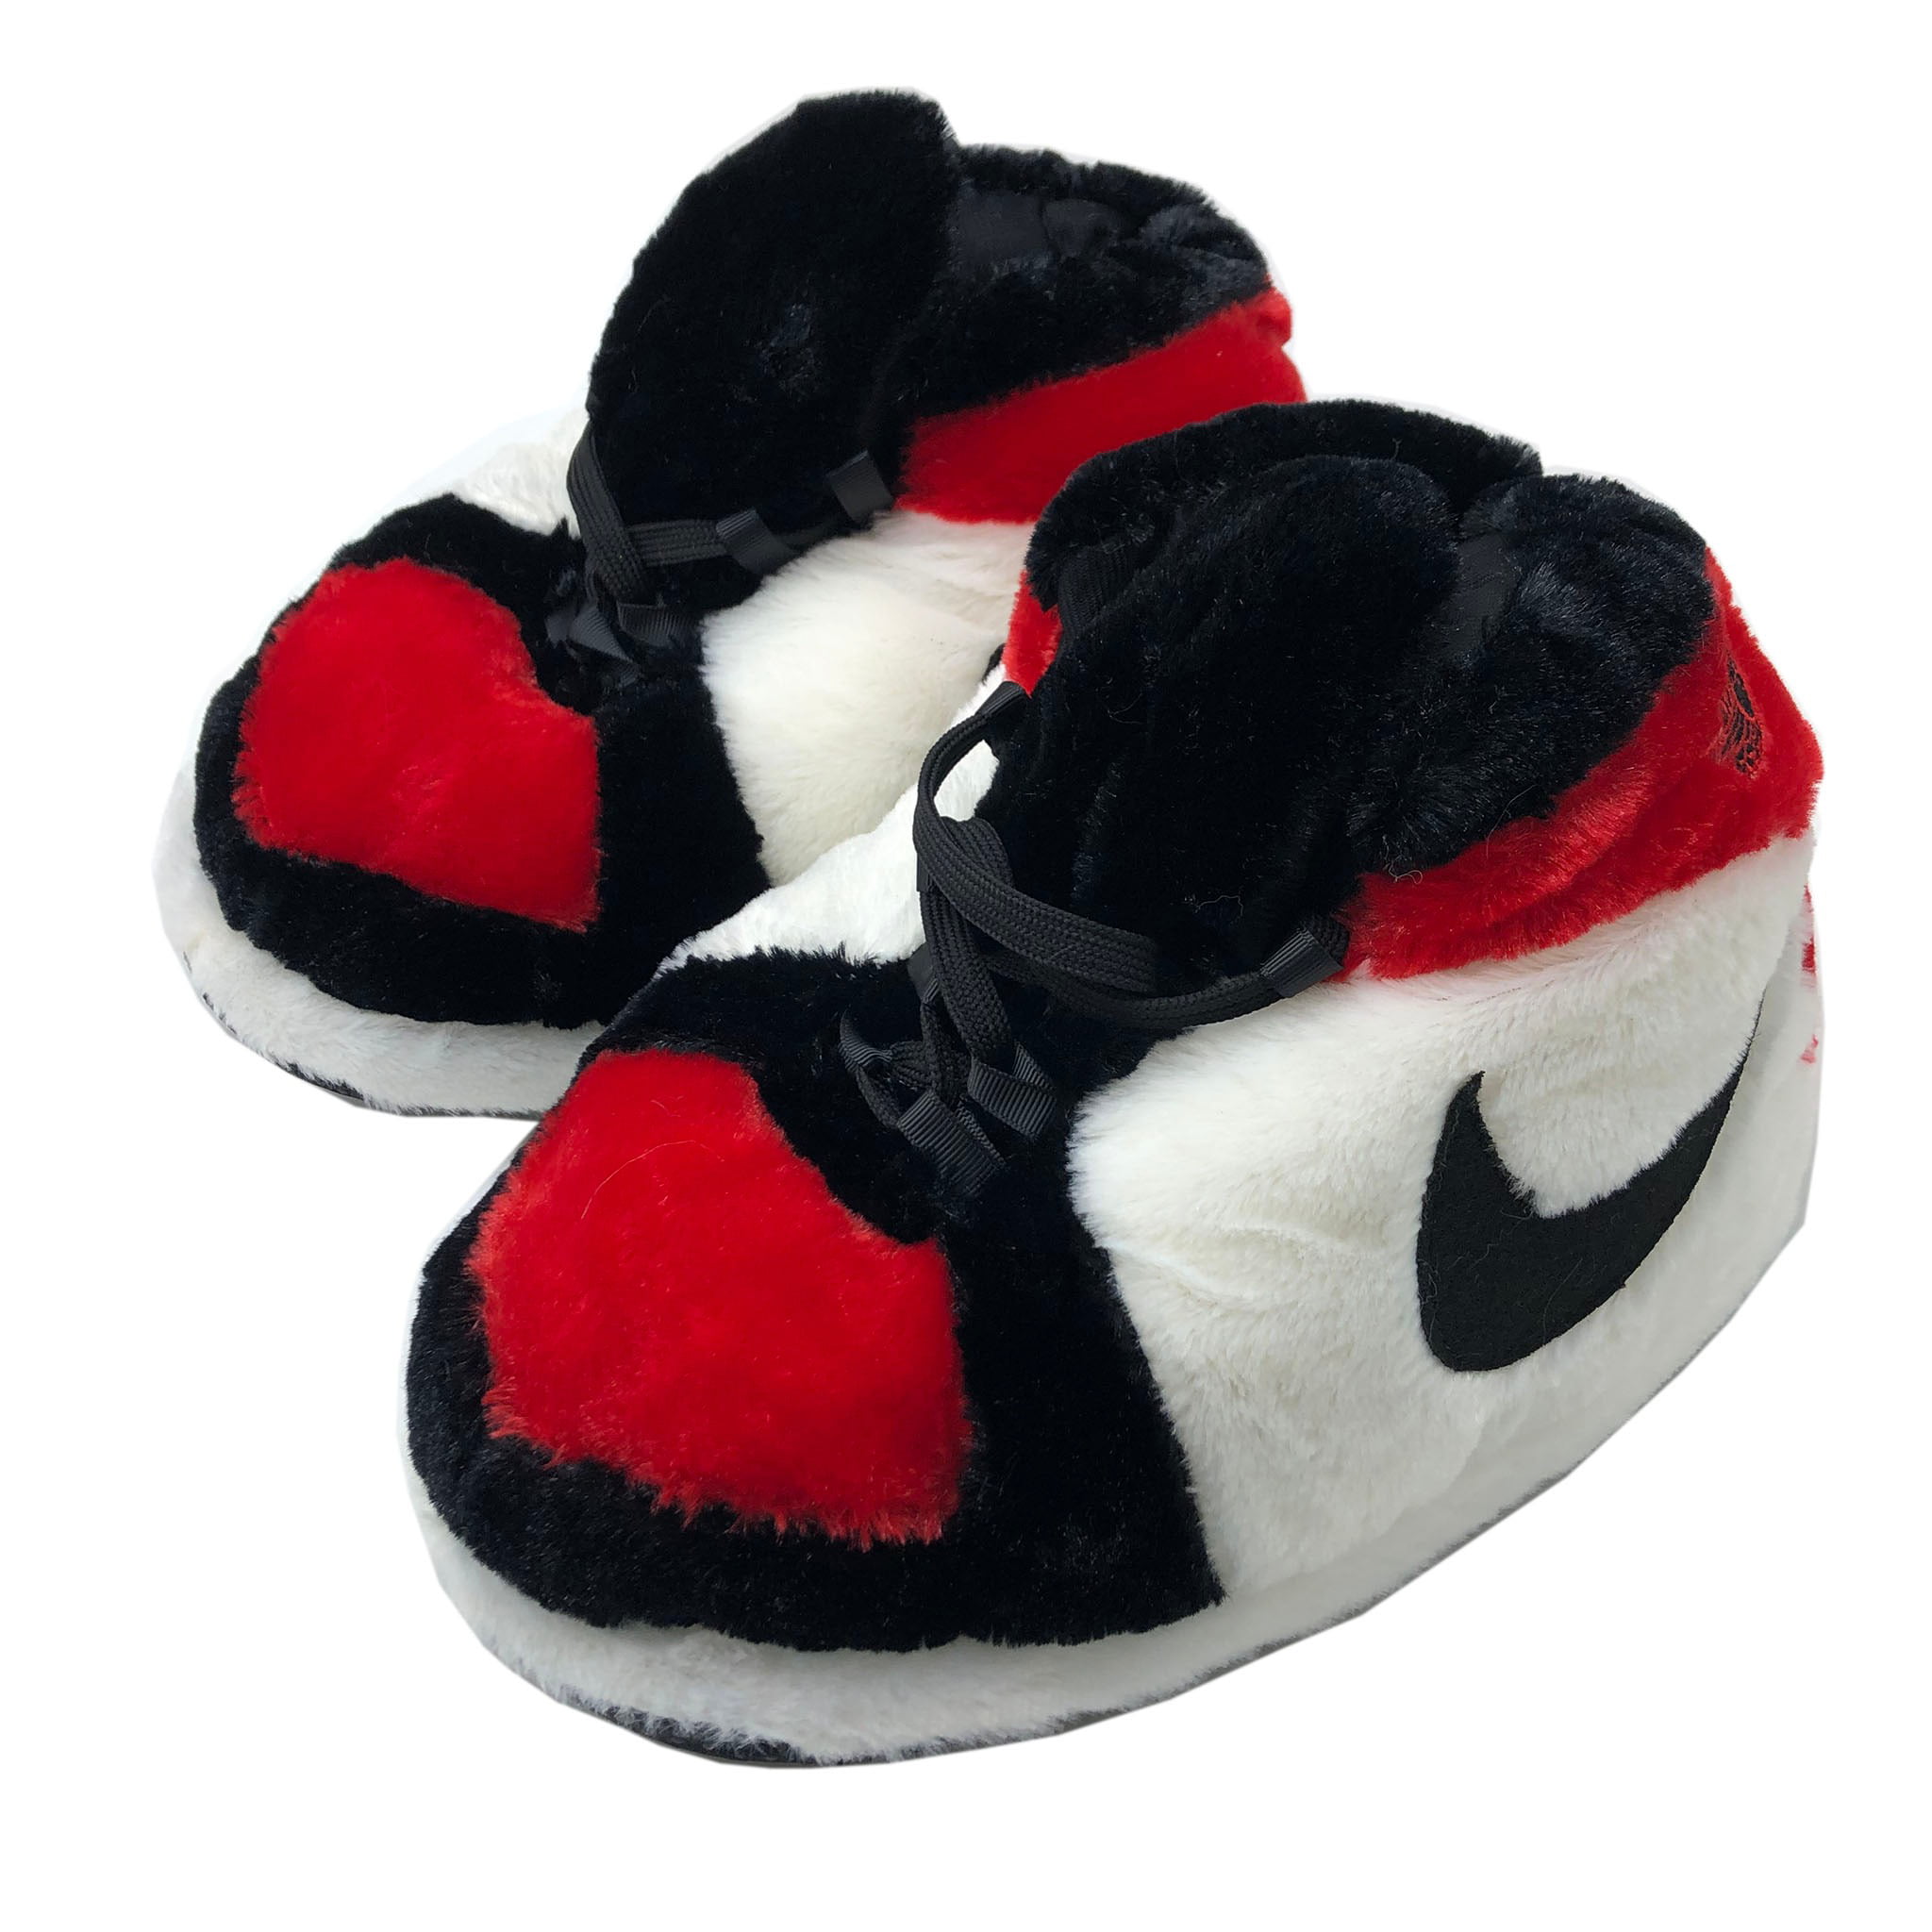 cozy jordan slippers